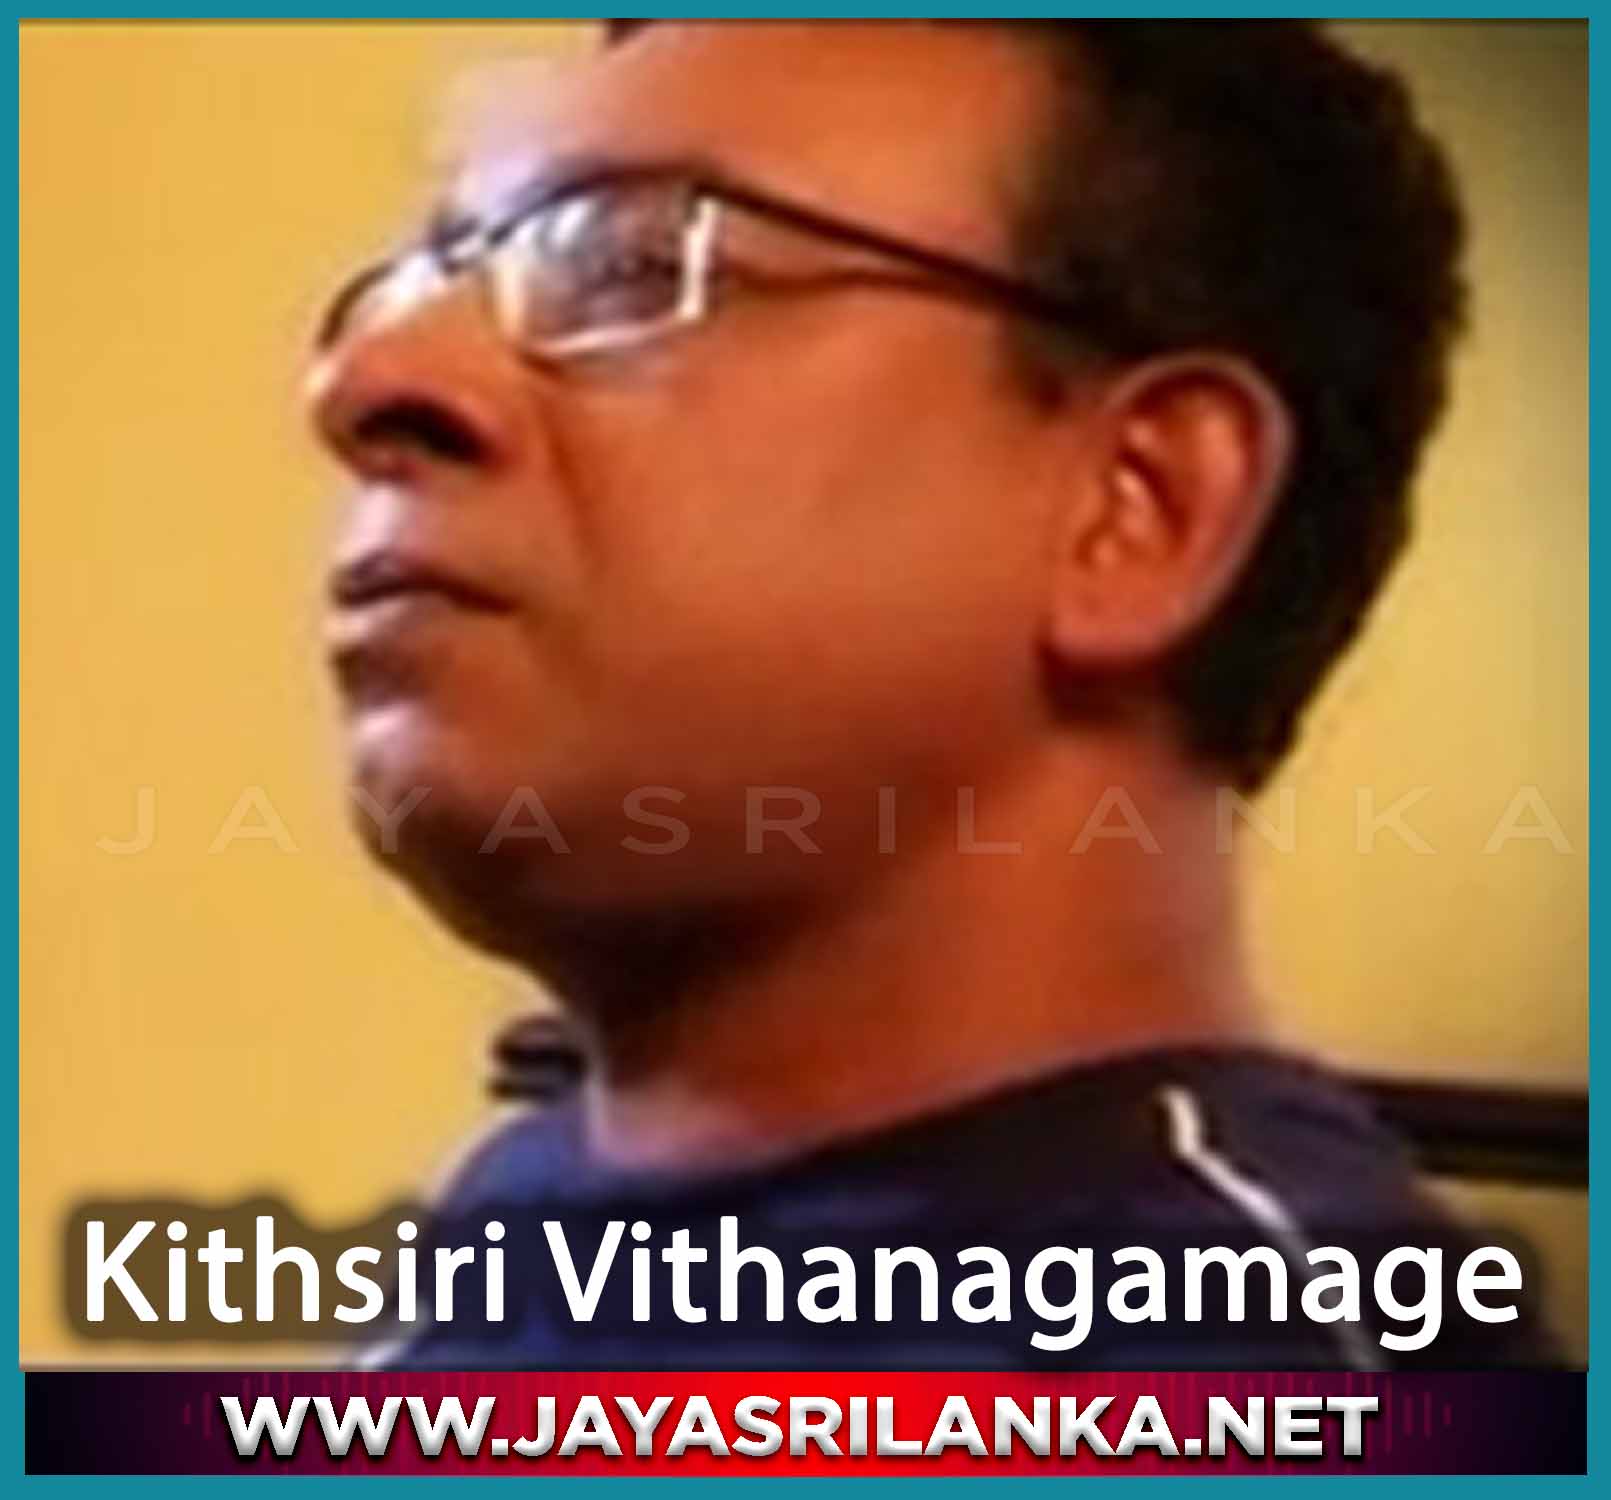 Sumudu Rala Men  Sagarika  - Kithsiri Vithanagamage mp3 Image